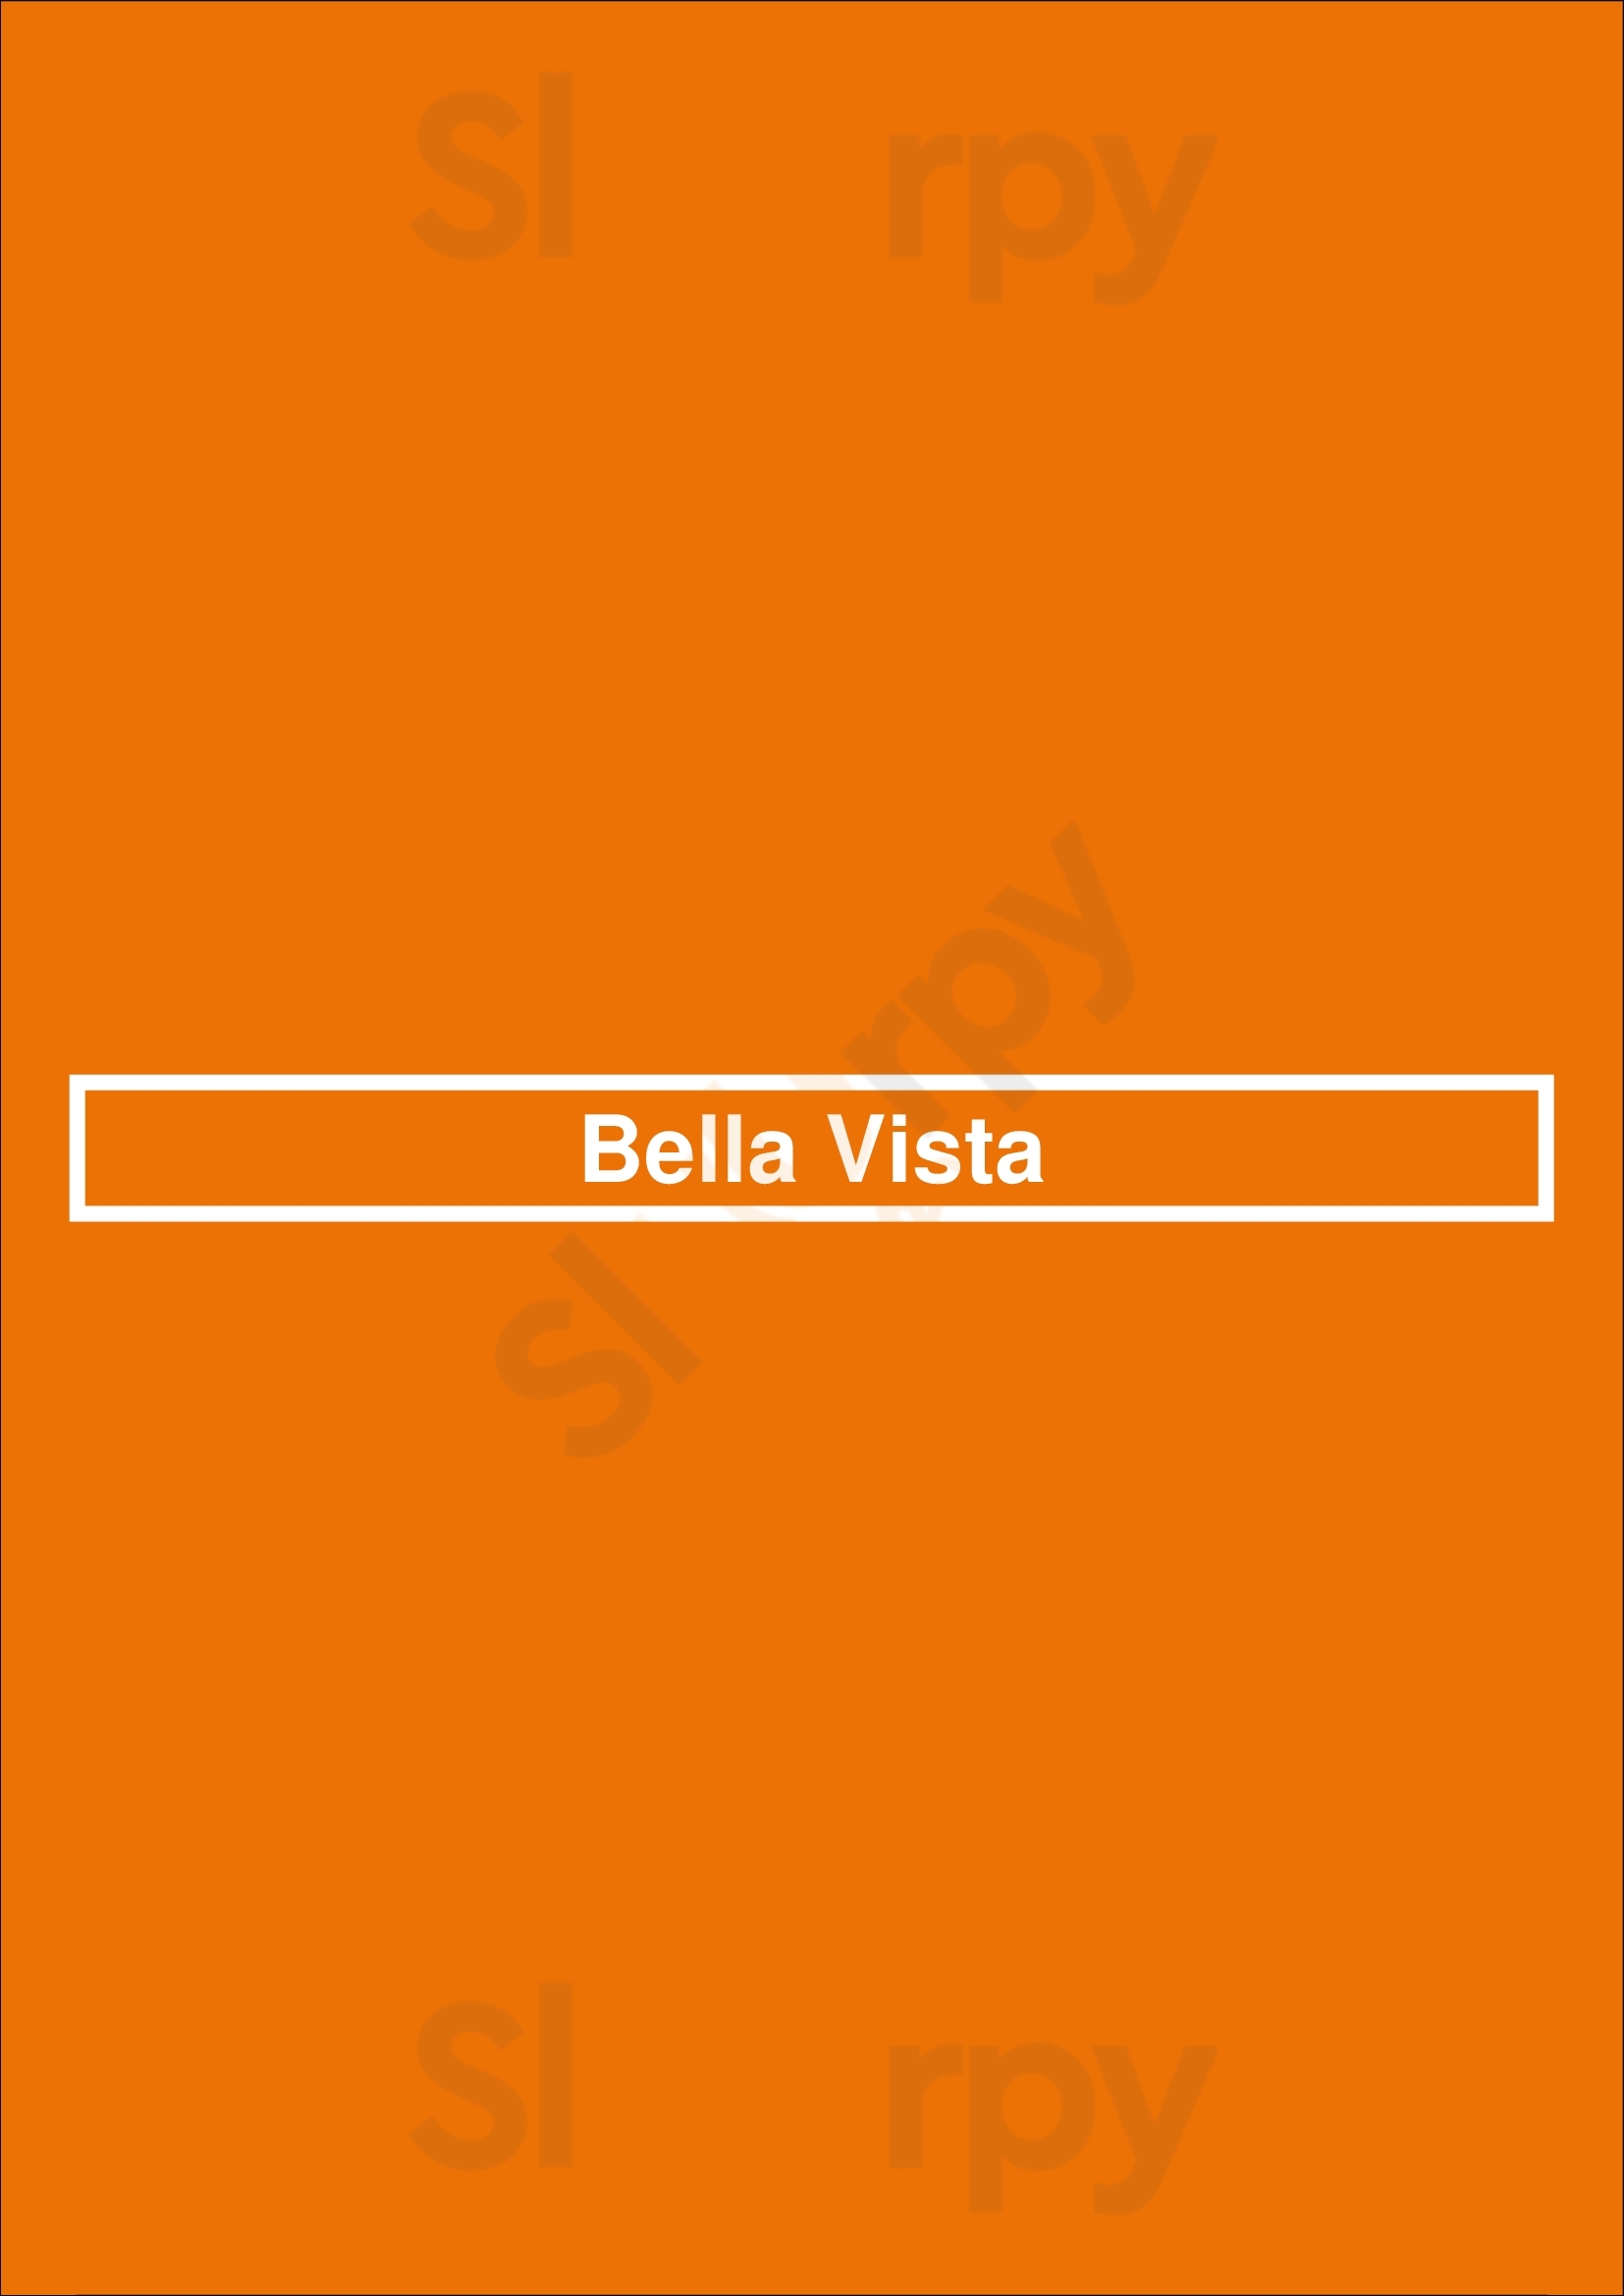 Bella Vista Anvers Menu - 1